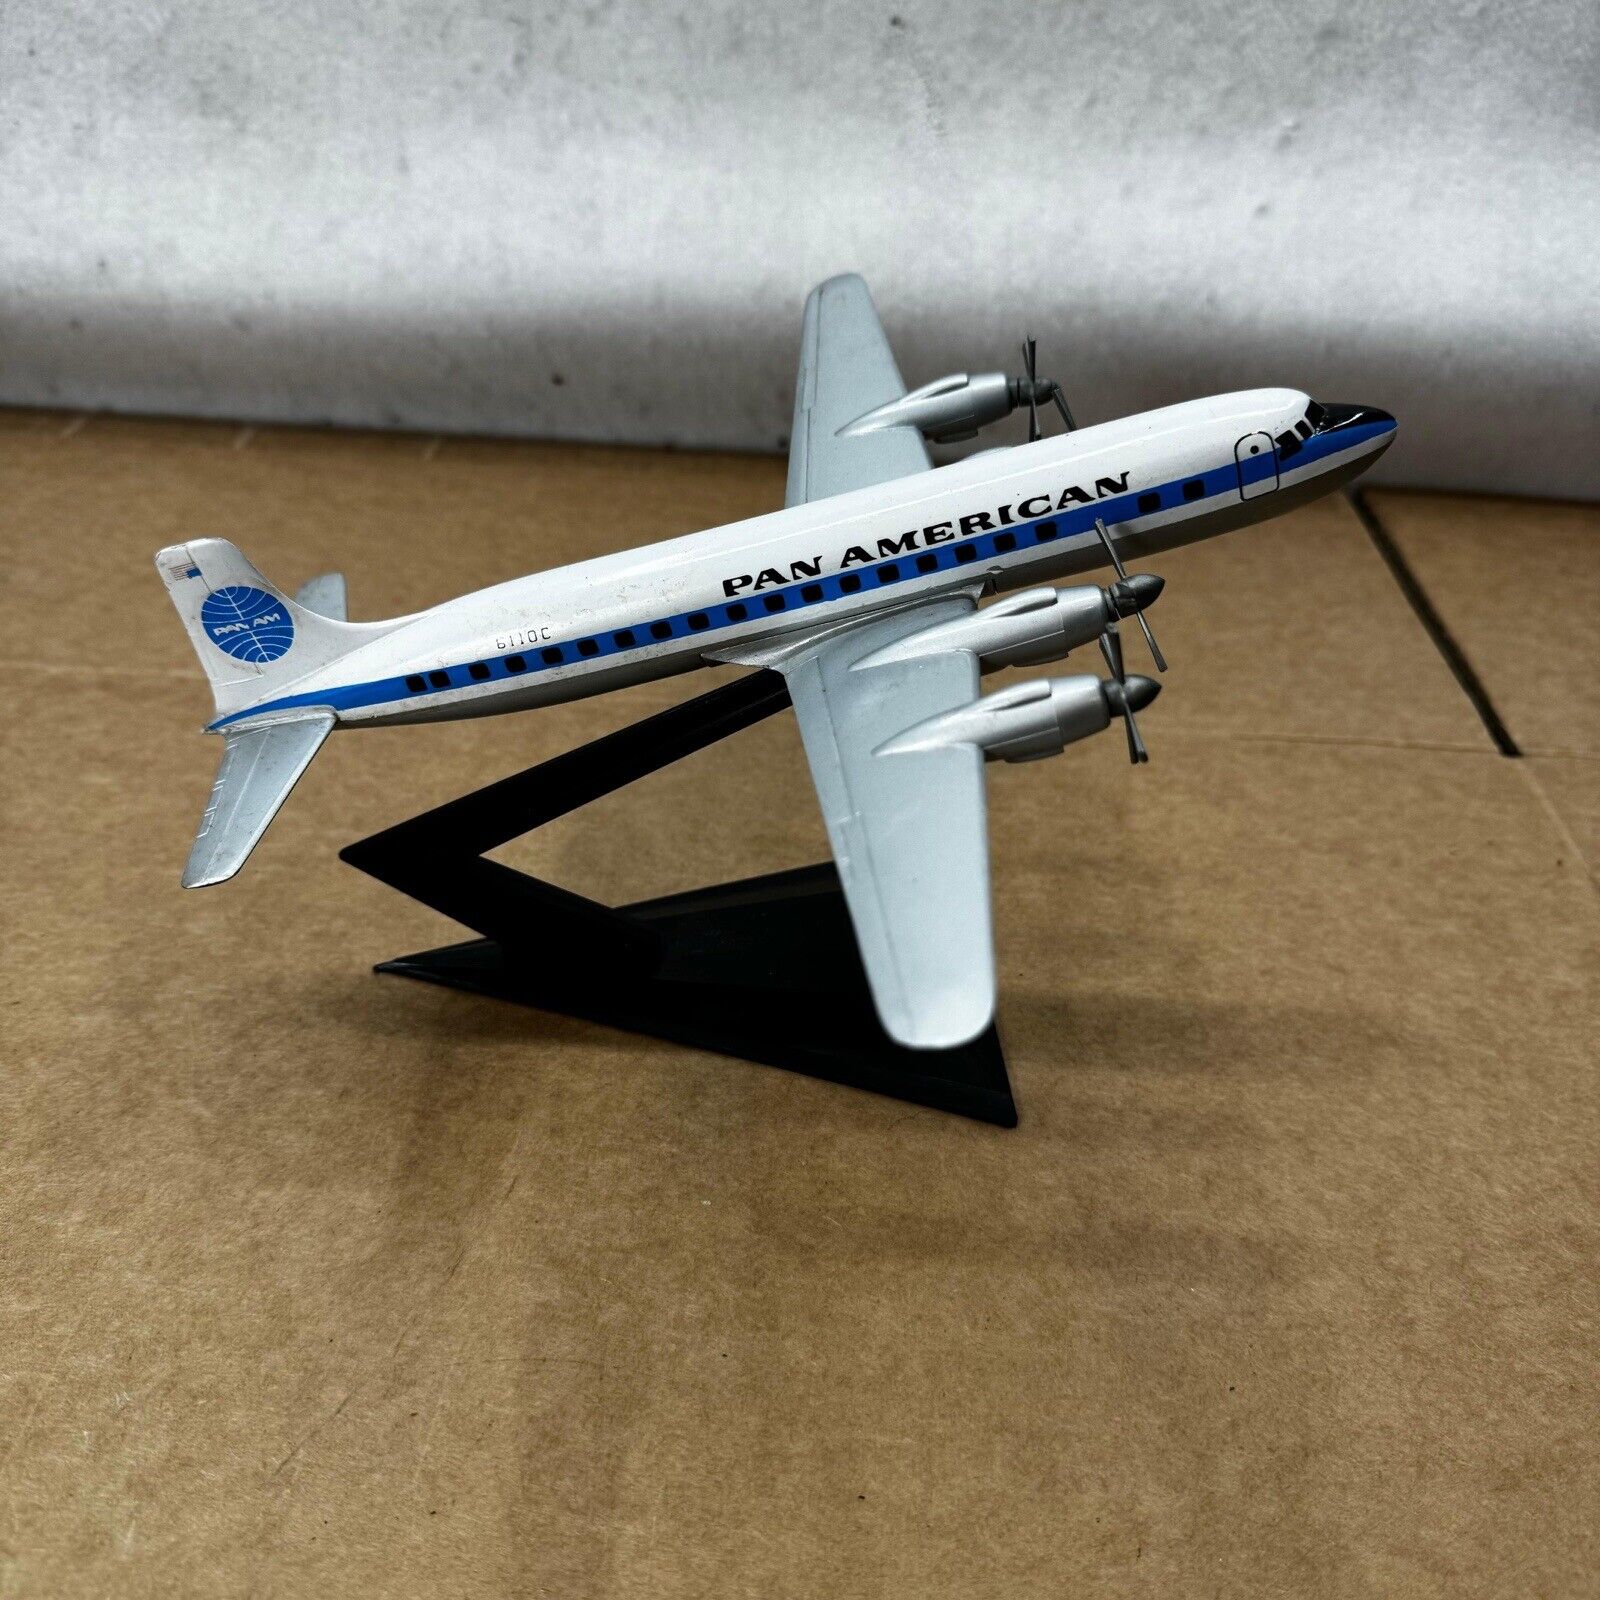 Vintage 1980s Pan American 6110C Airplane Model and Display Stand